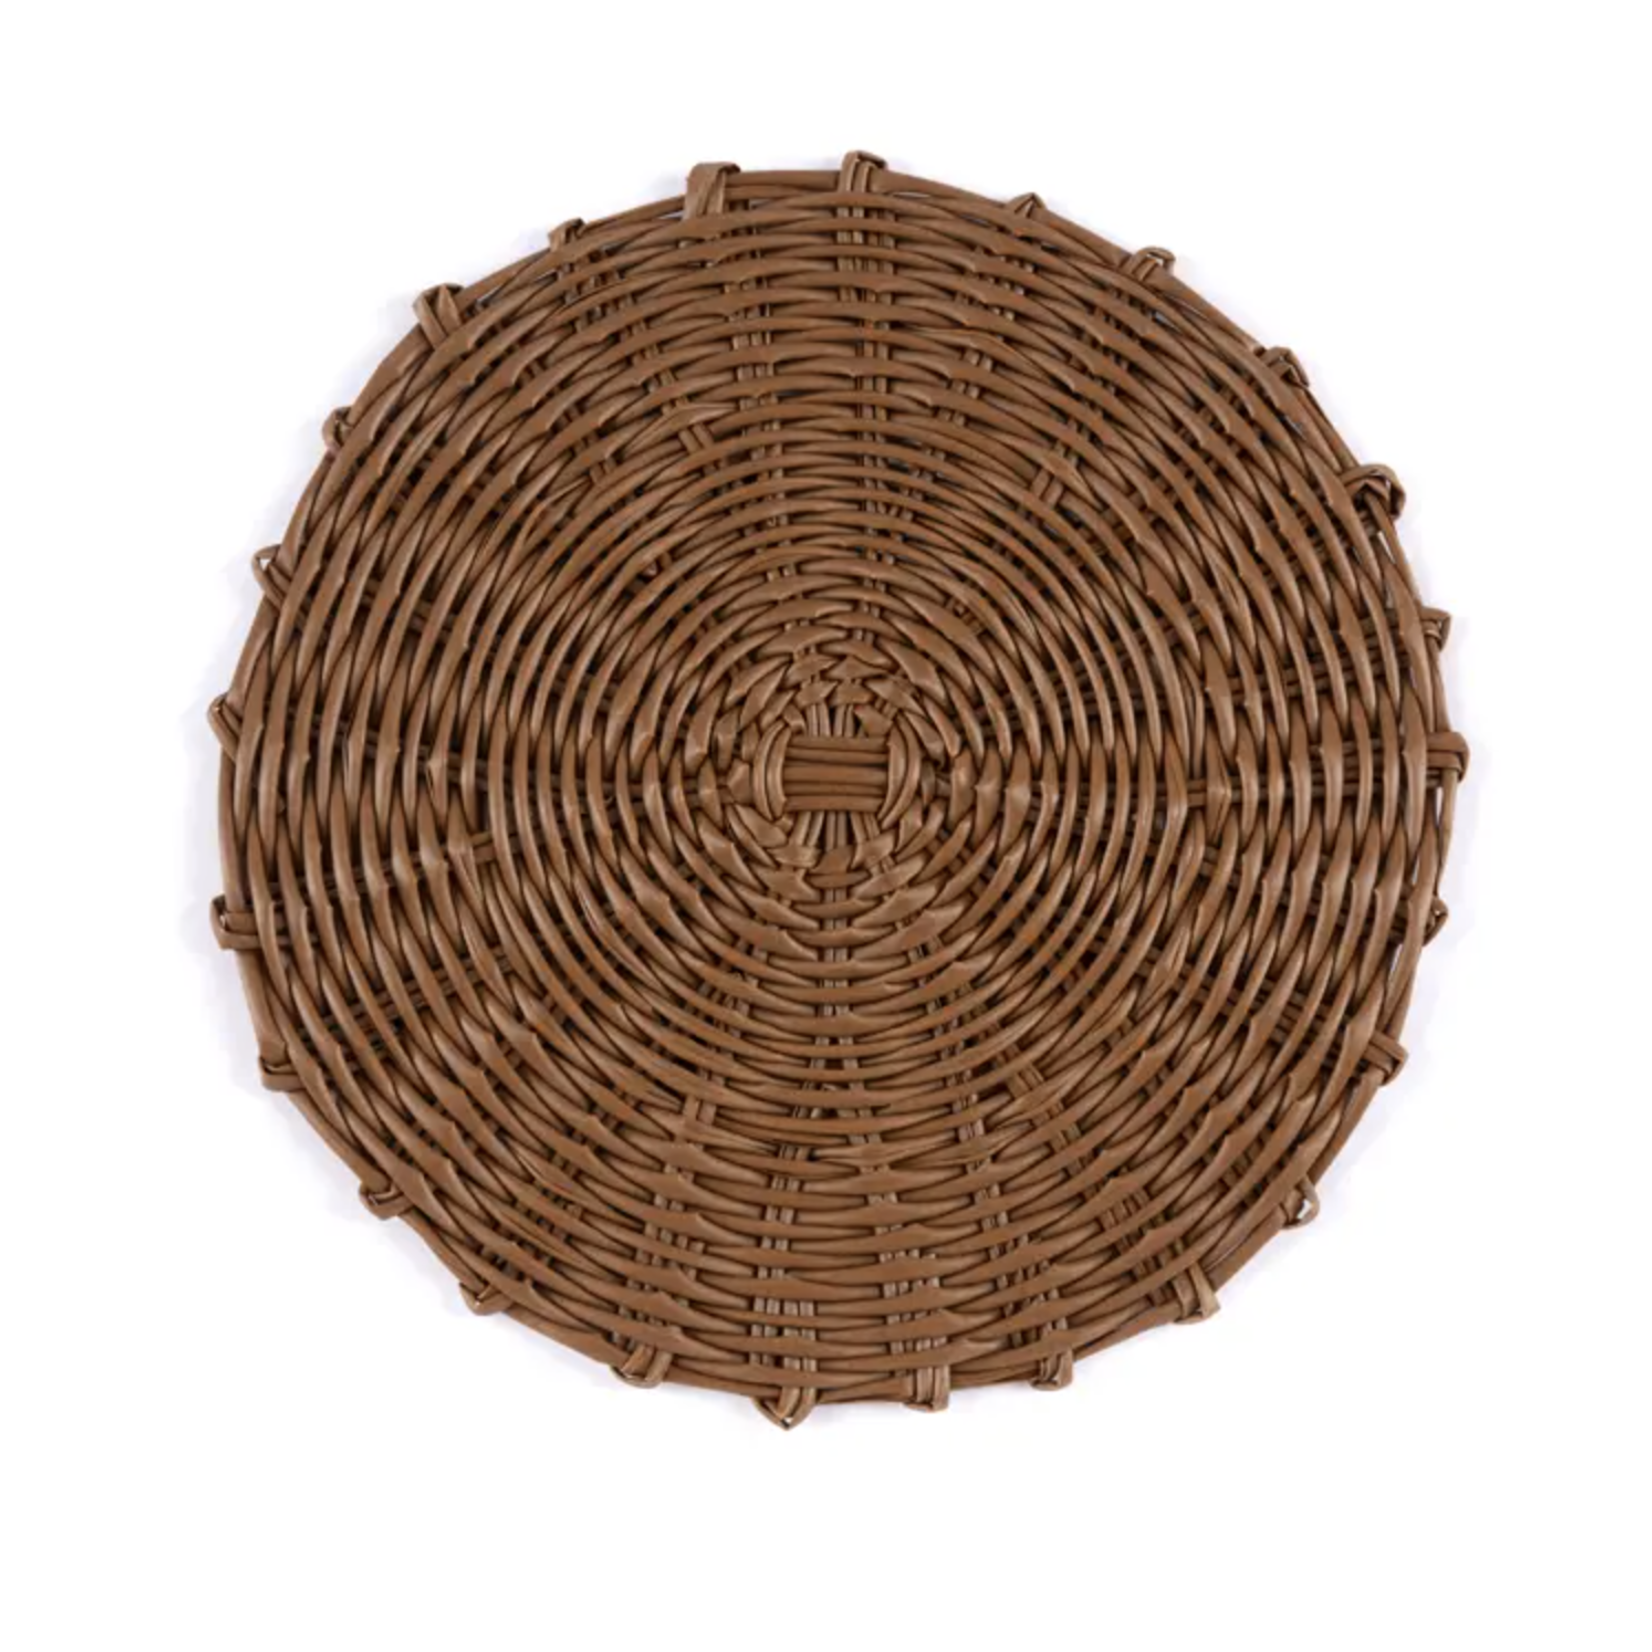 Basket Weave Placemats